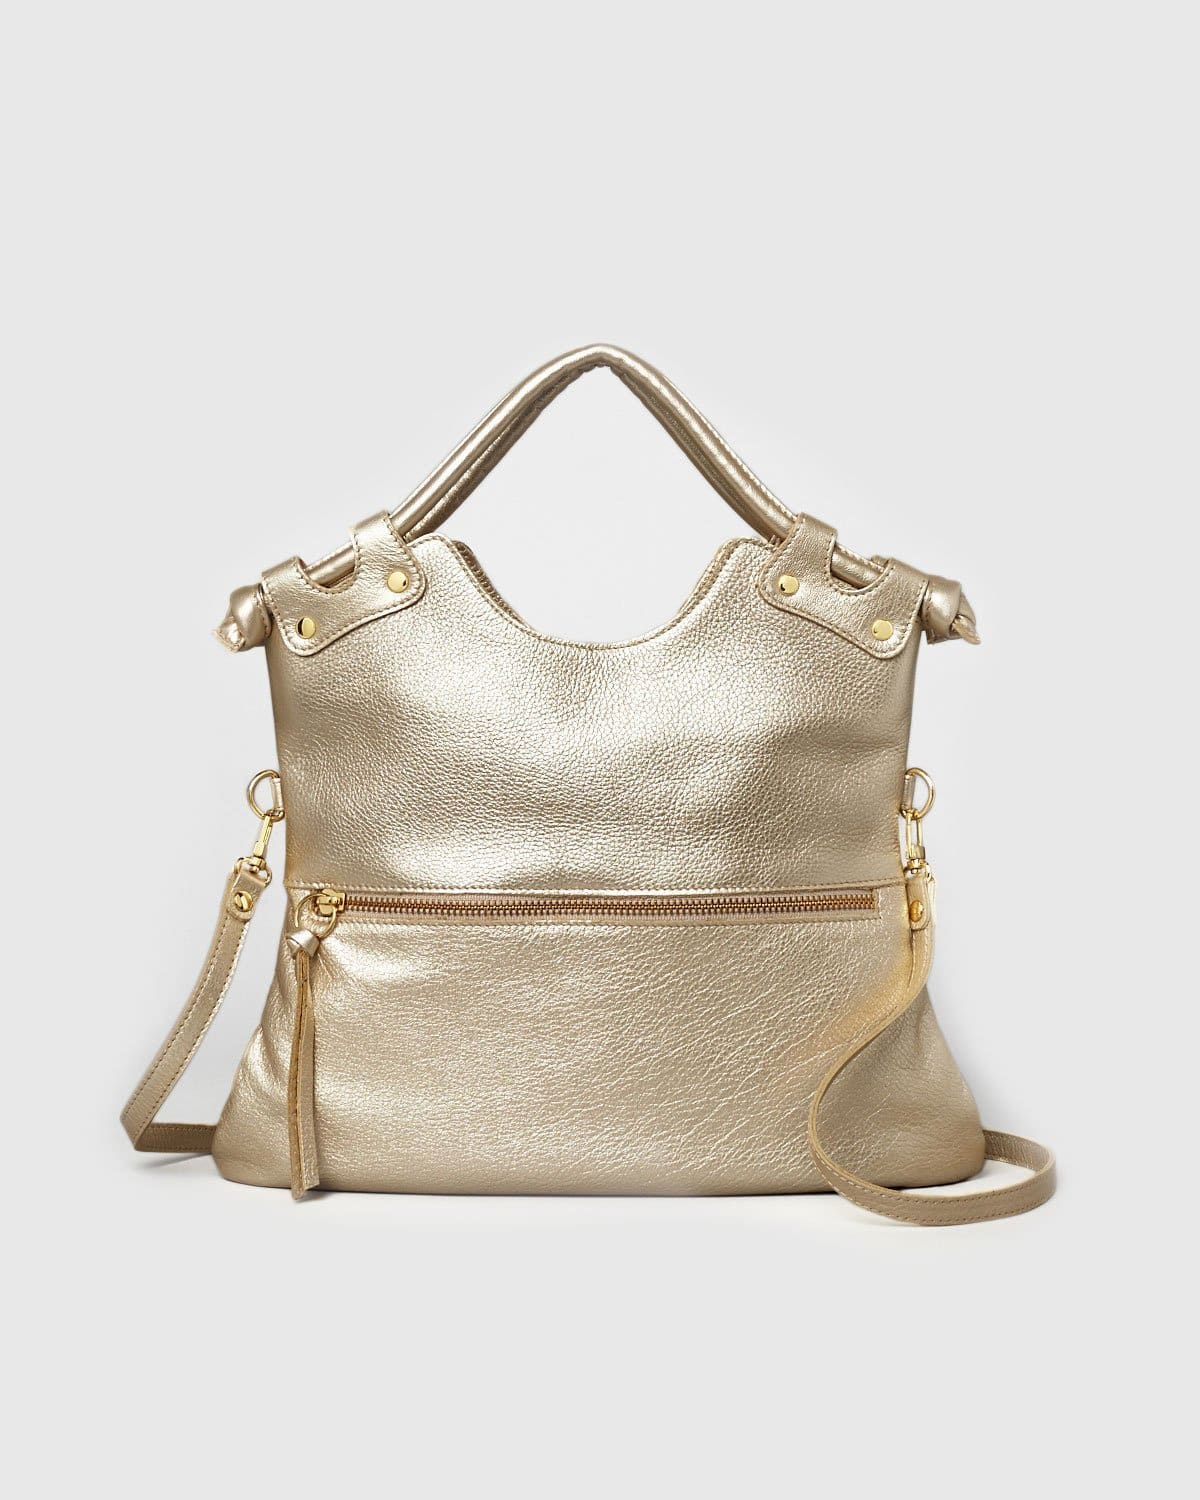 Brooklyn - Silver Metallic Leather Handbag Made in Nyc | Pietro Nyc